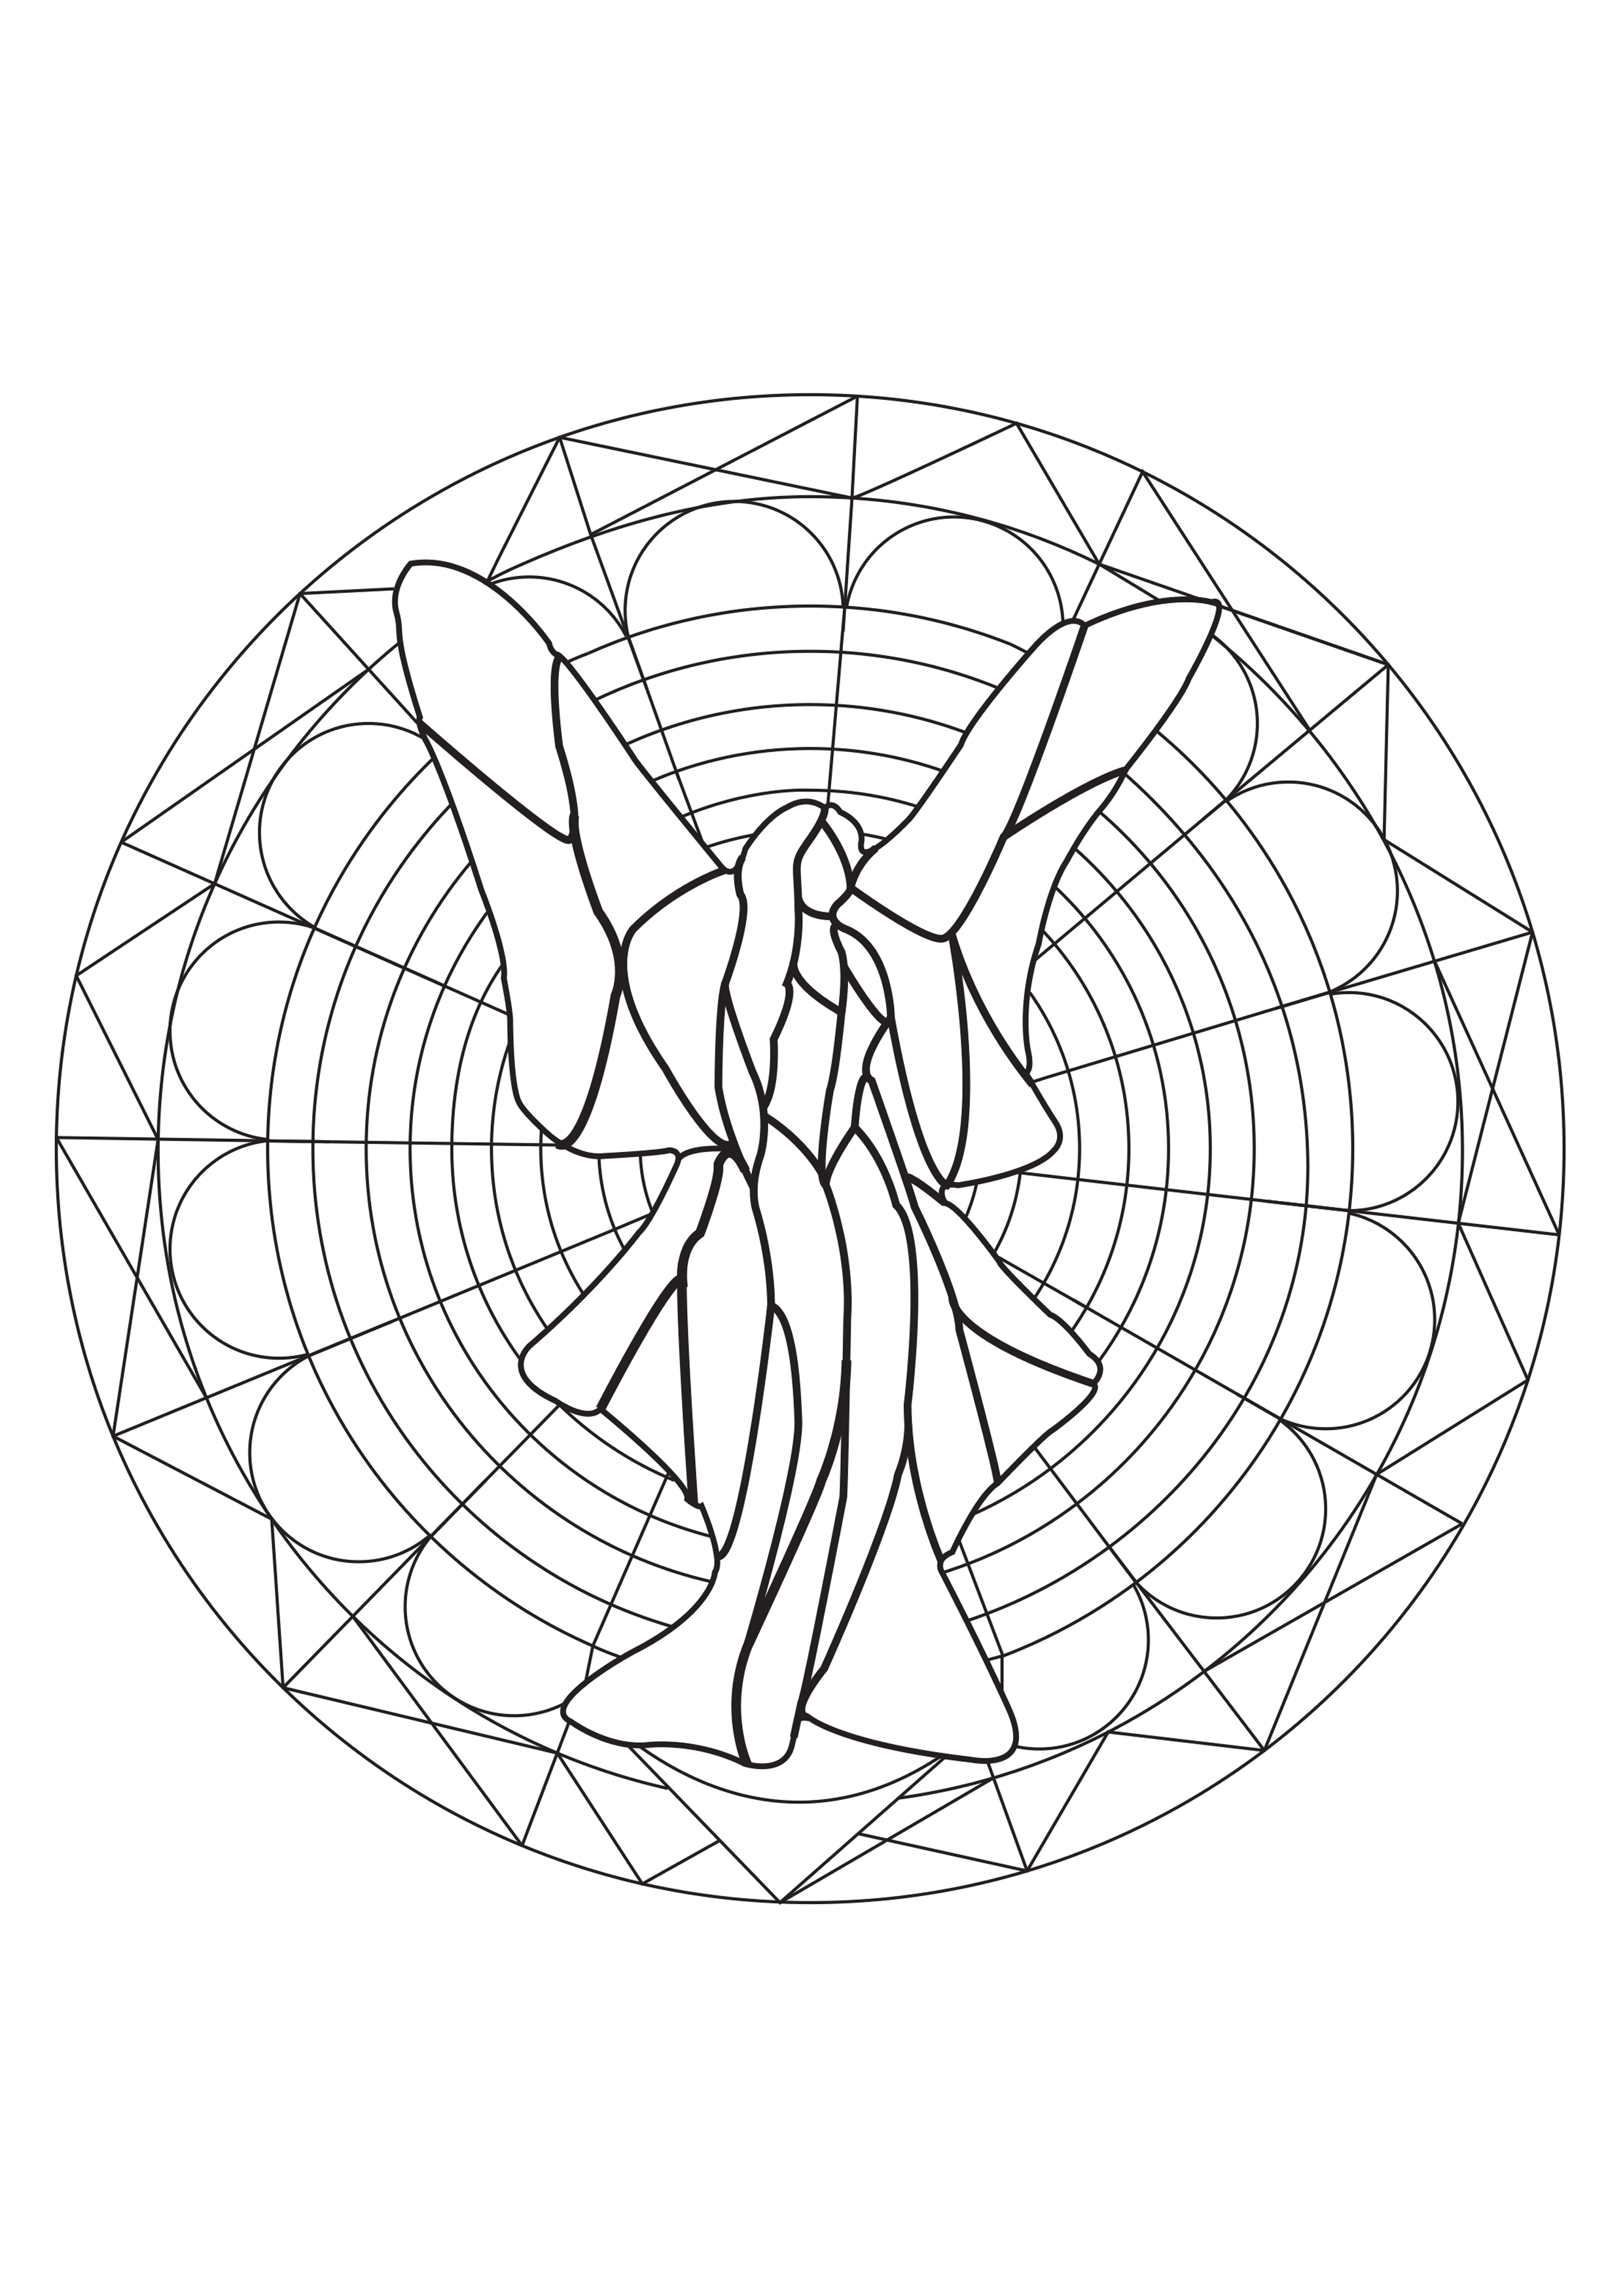 Fairy in a Mandala, Artist : Allan